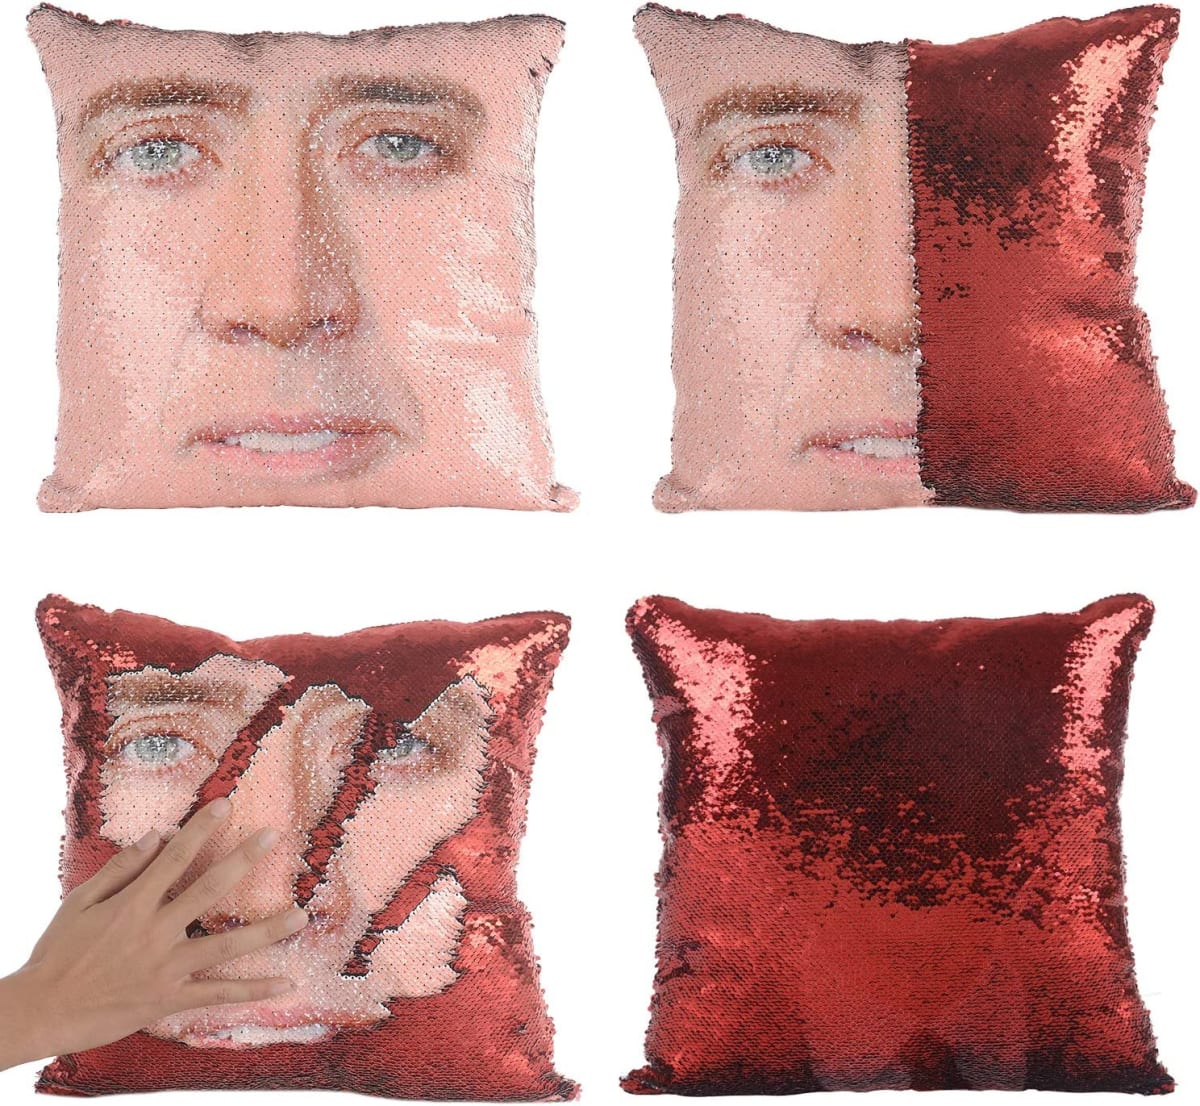 Nicolas Cage Mermaid Pillow Cover